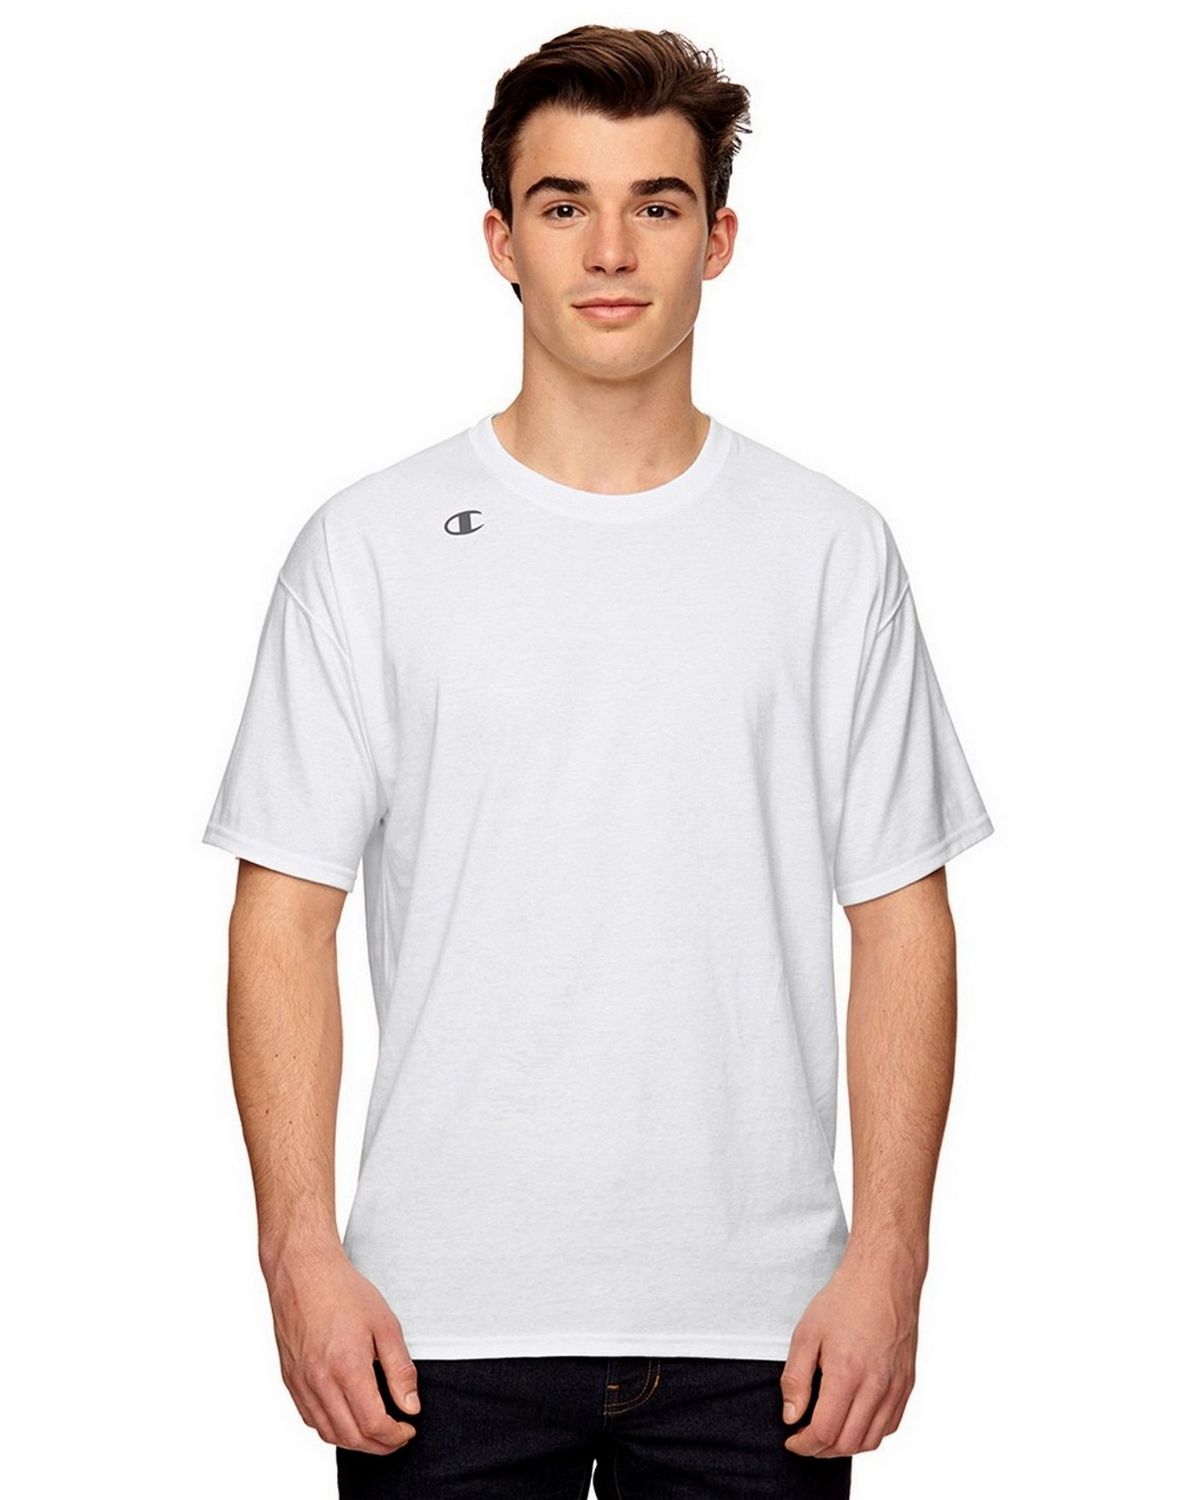 Champion T-Shirt T380 Men's Vapor Cotton Short-Sleeve NEW